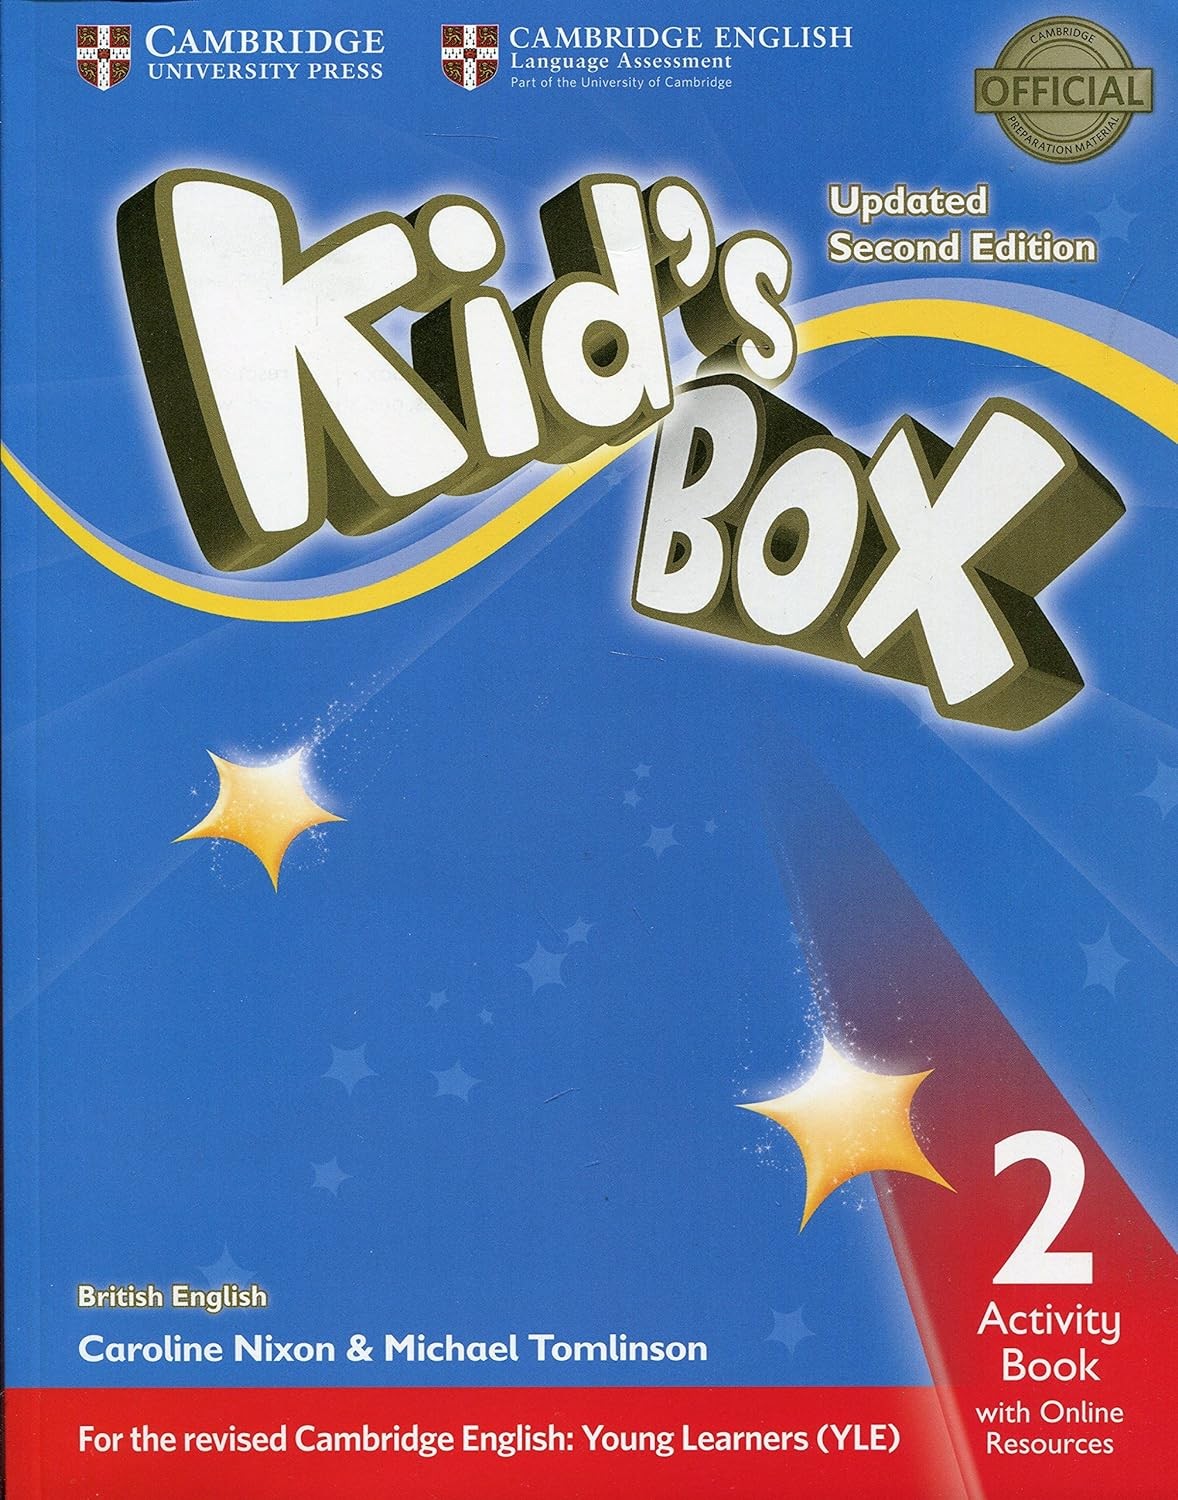 Cambridge Kids Box 2 Activity Book